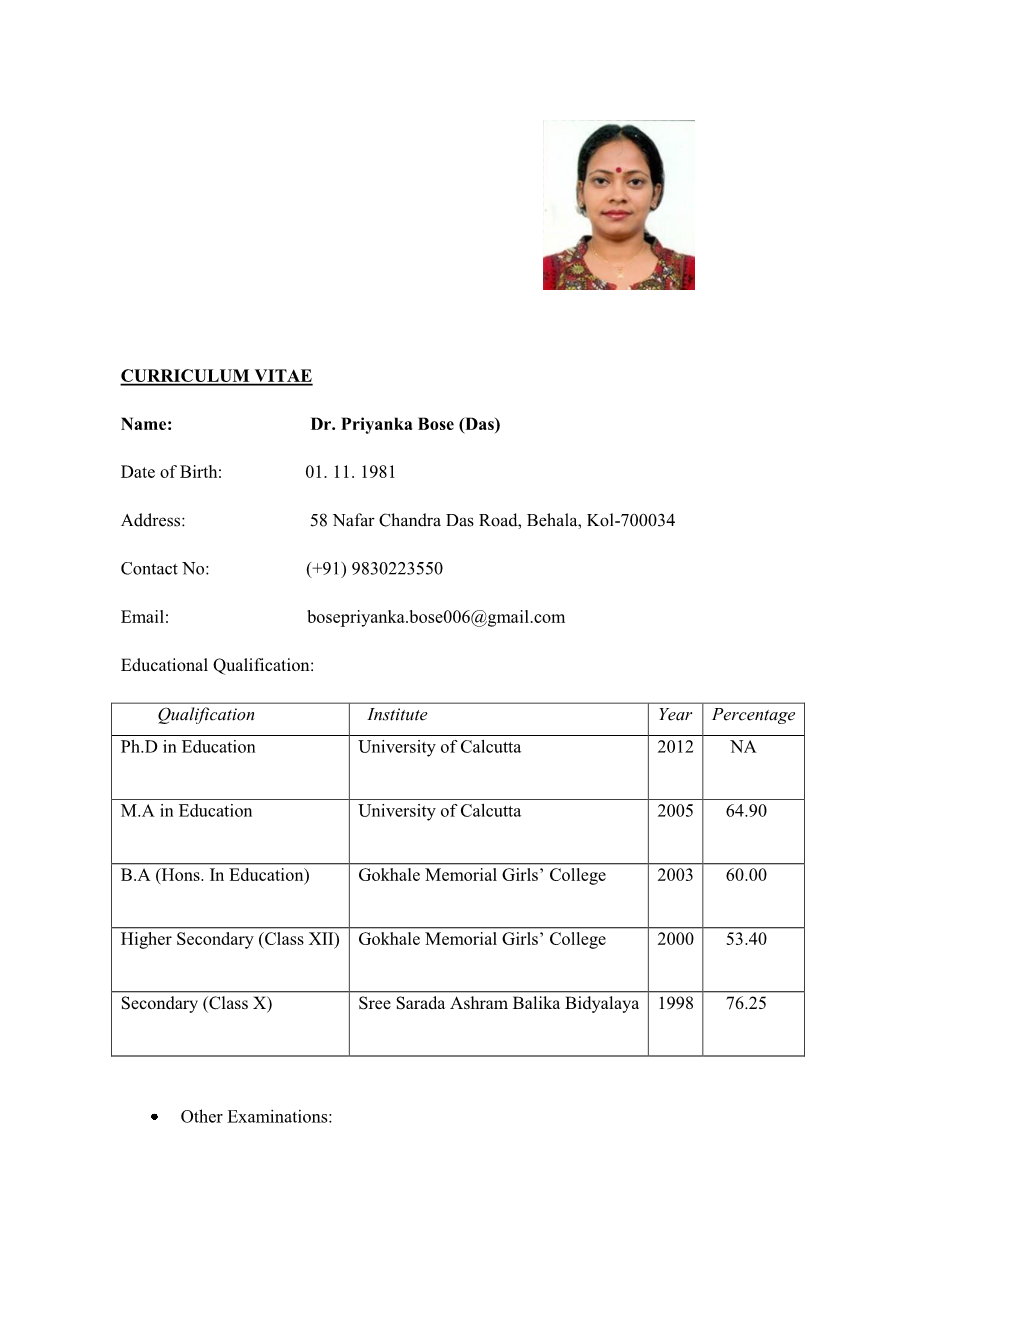 CURRICULUM VITAE Name: Dr. Priyanka Bose (Das) Date of Birth